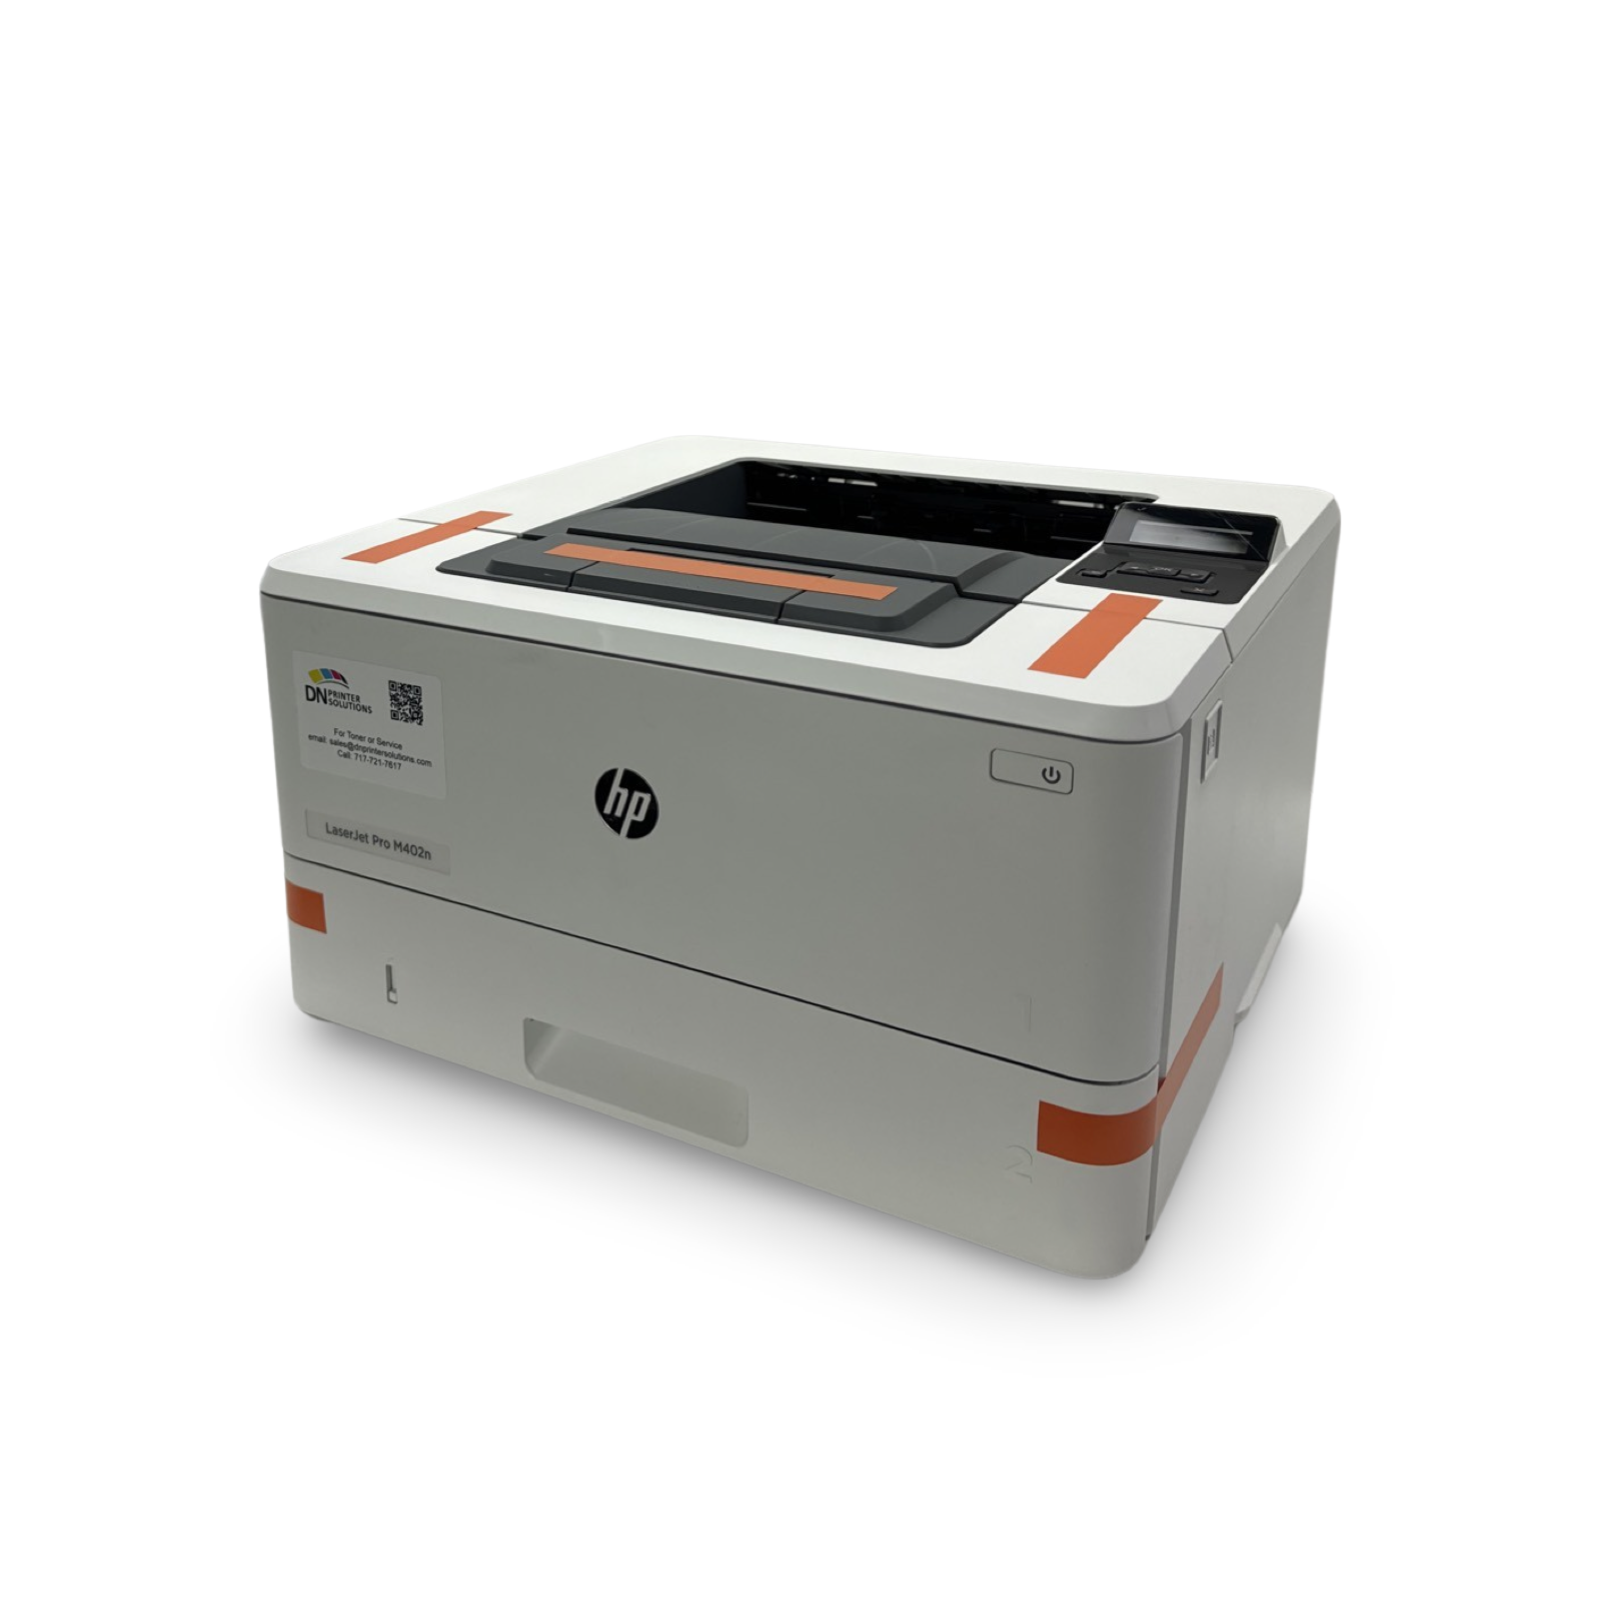 HP LaserJet Pro M402n Laser Printer C5F93A Refurbished